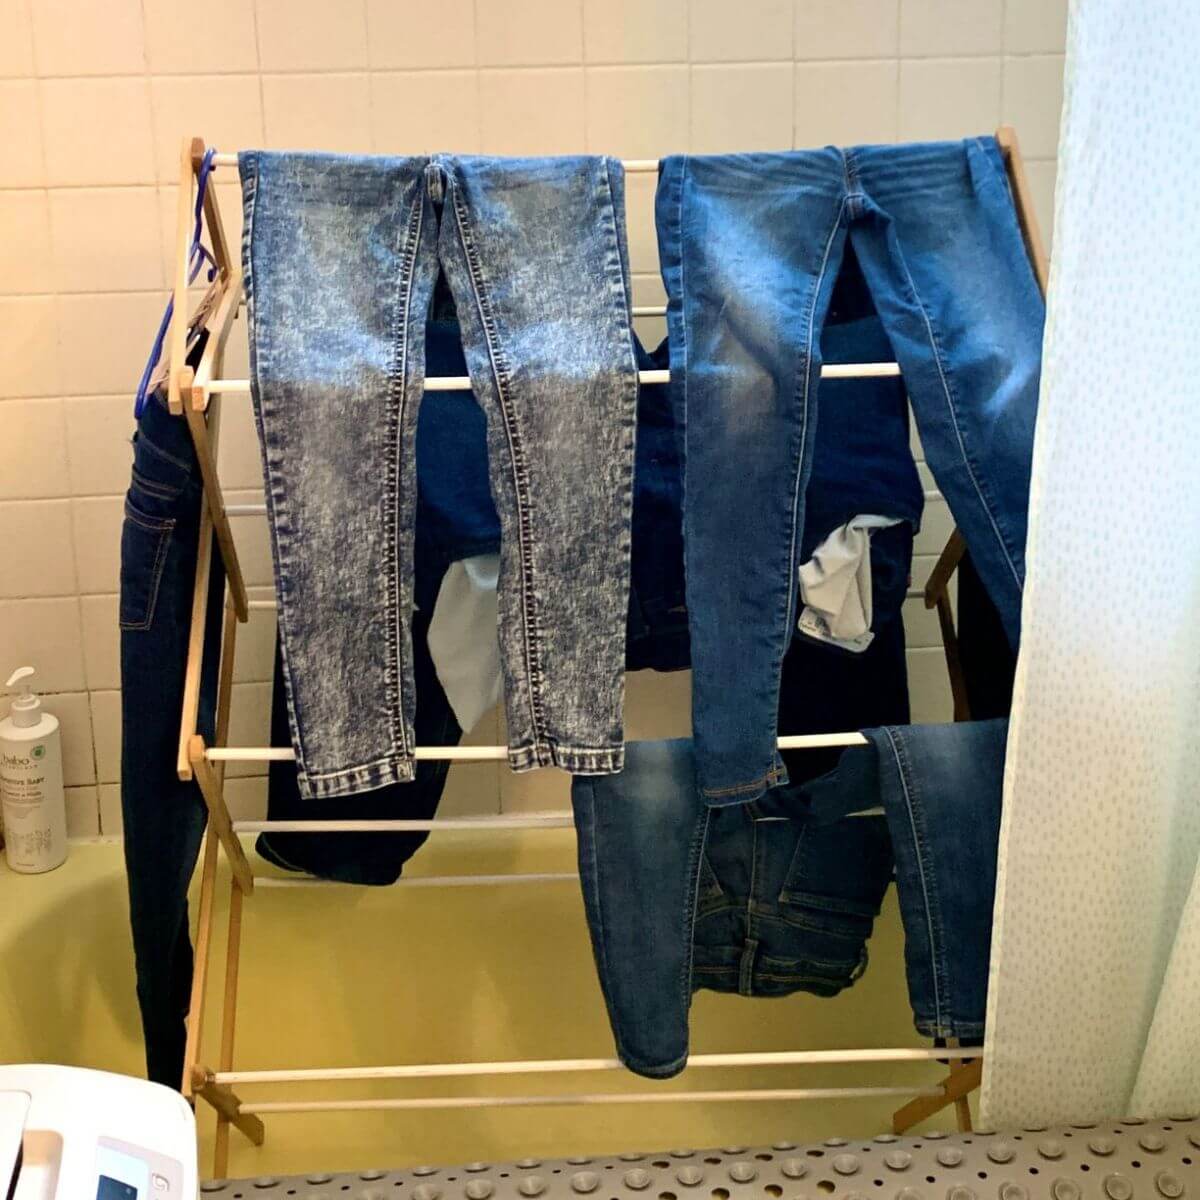 drying rack full of jeans in yellow bathtub.